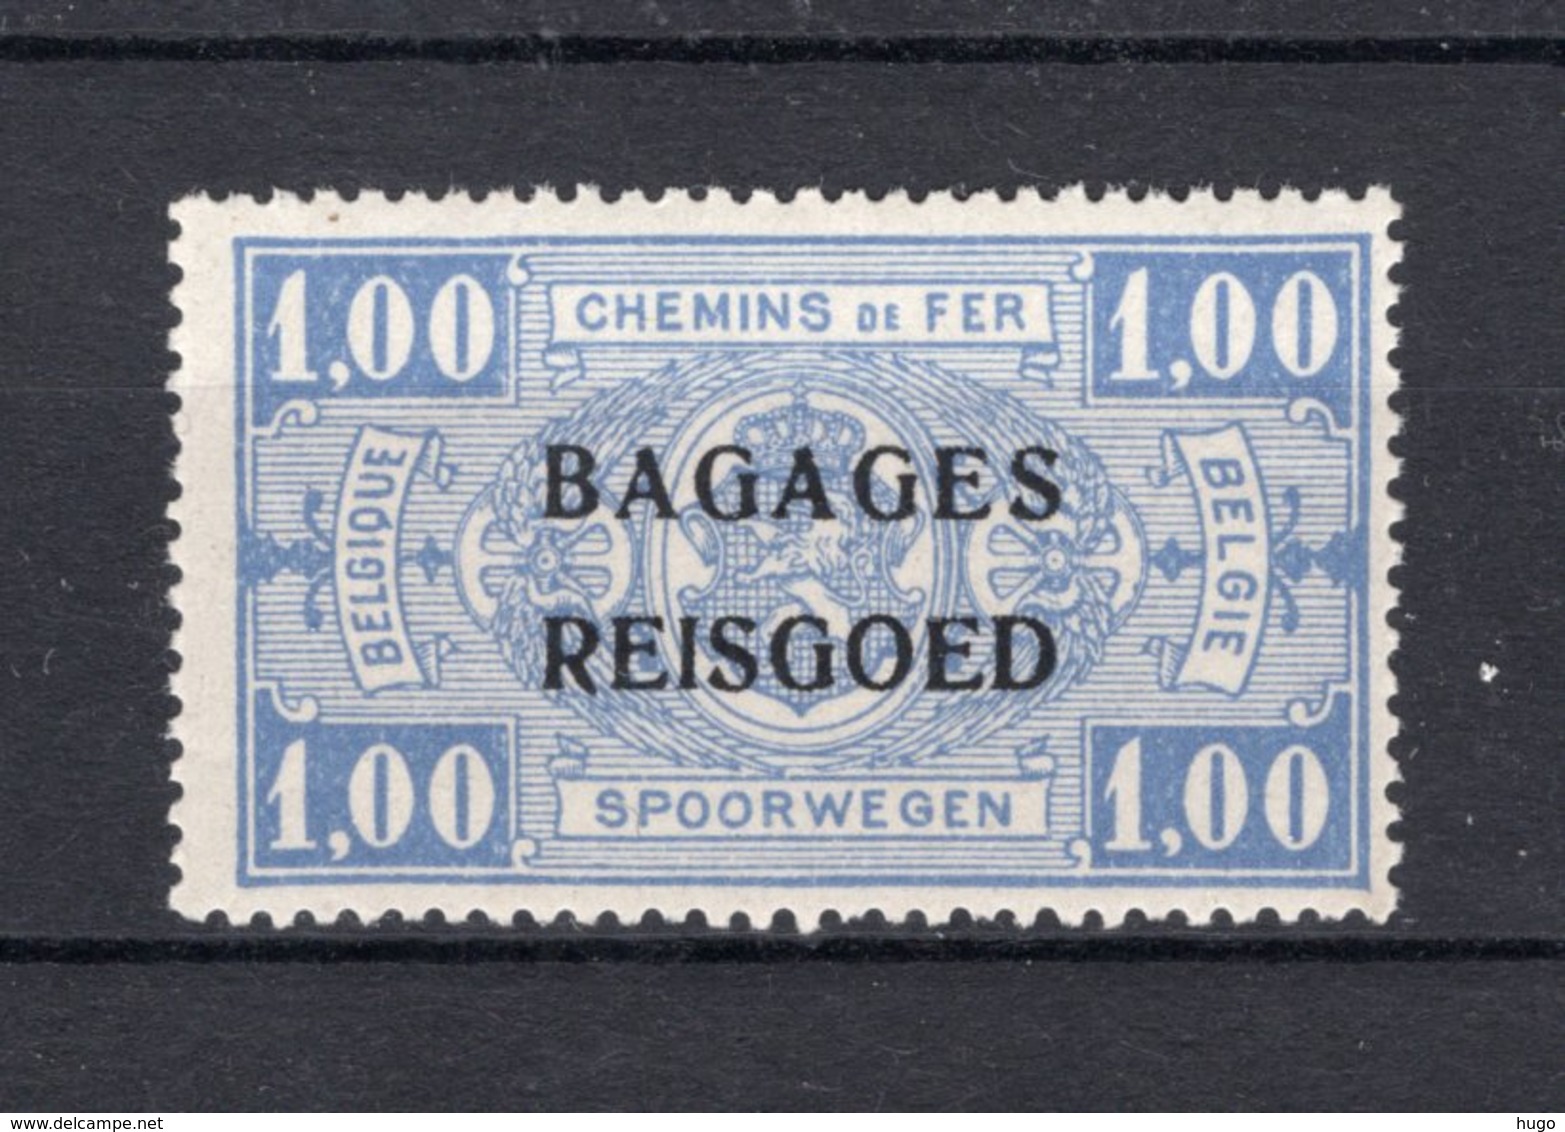 BA10 MNH** 1935 - Spoorwegzegels Van 1923-31 Met Opdruk "BAGAGES - REISGOED" - Bagages [BA]